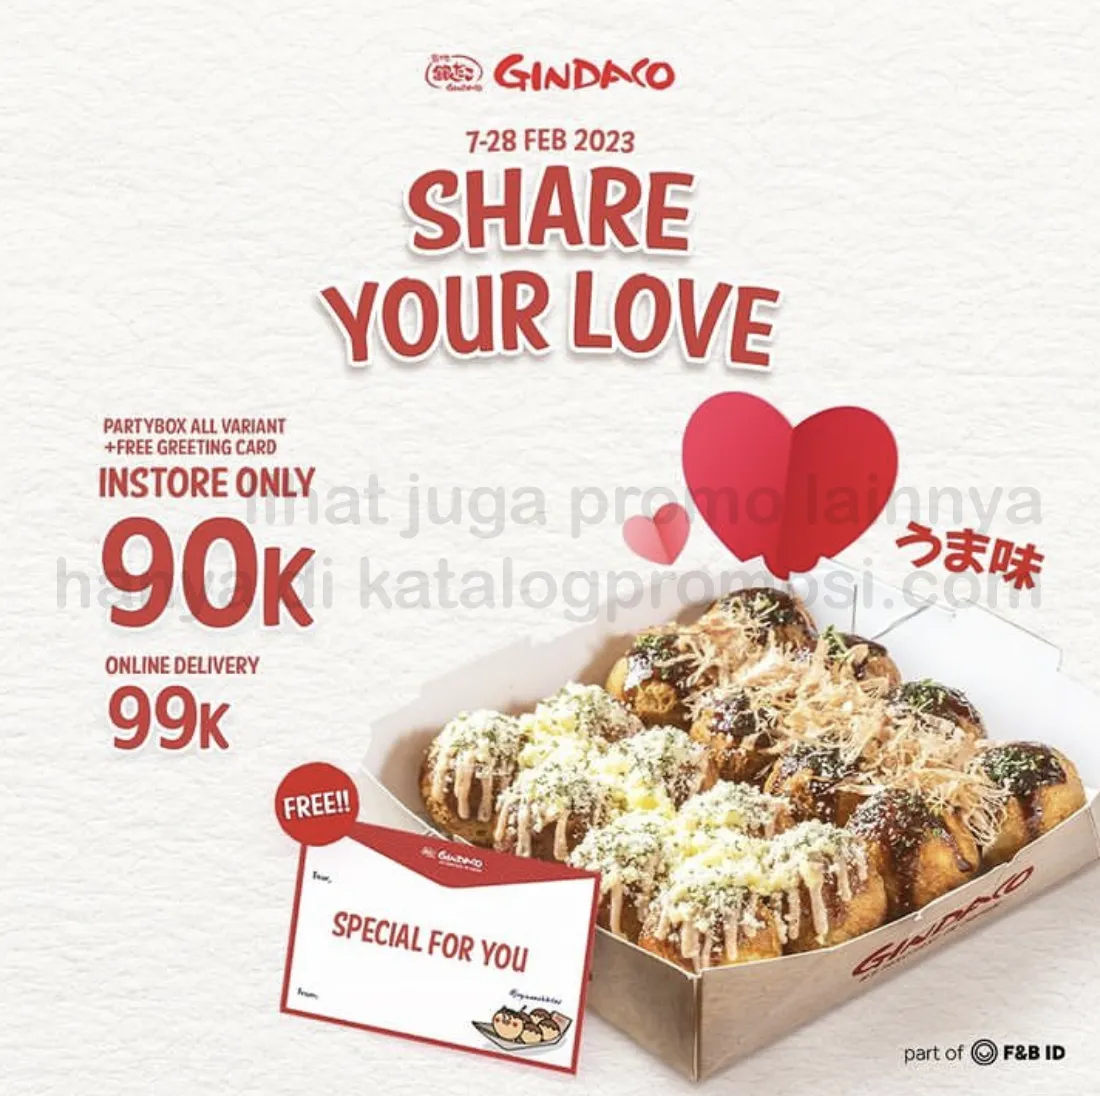 Promo GINDACO SHARE THE LOVE! Beli Paket Party Box all variant + Free Greeting Card mulai 90RIBU